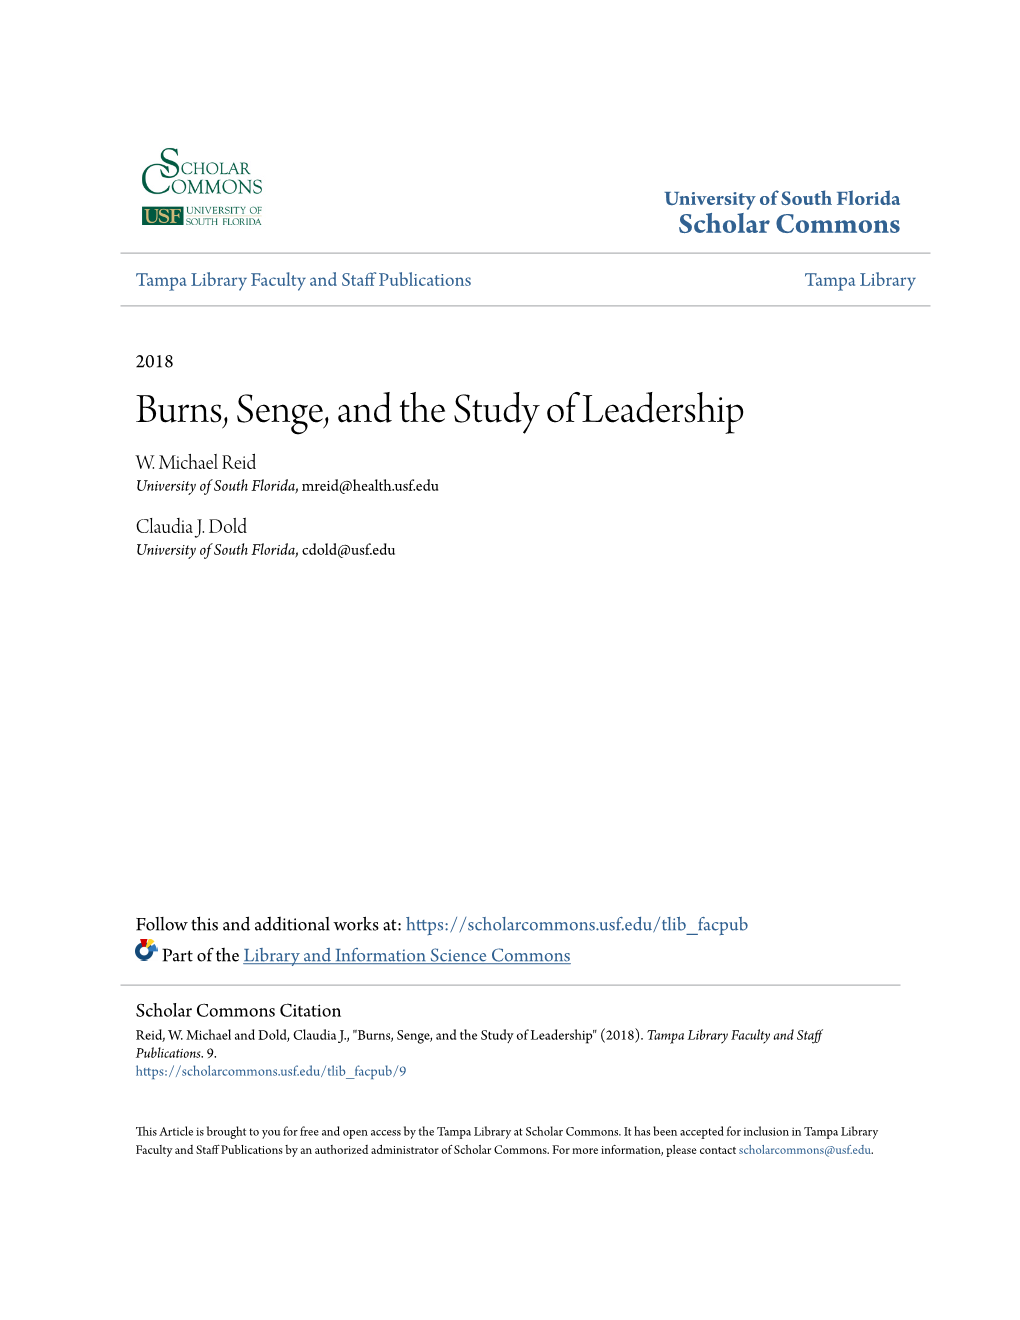 Burns, Senge, and the Study of Leadership W